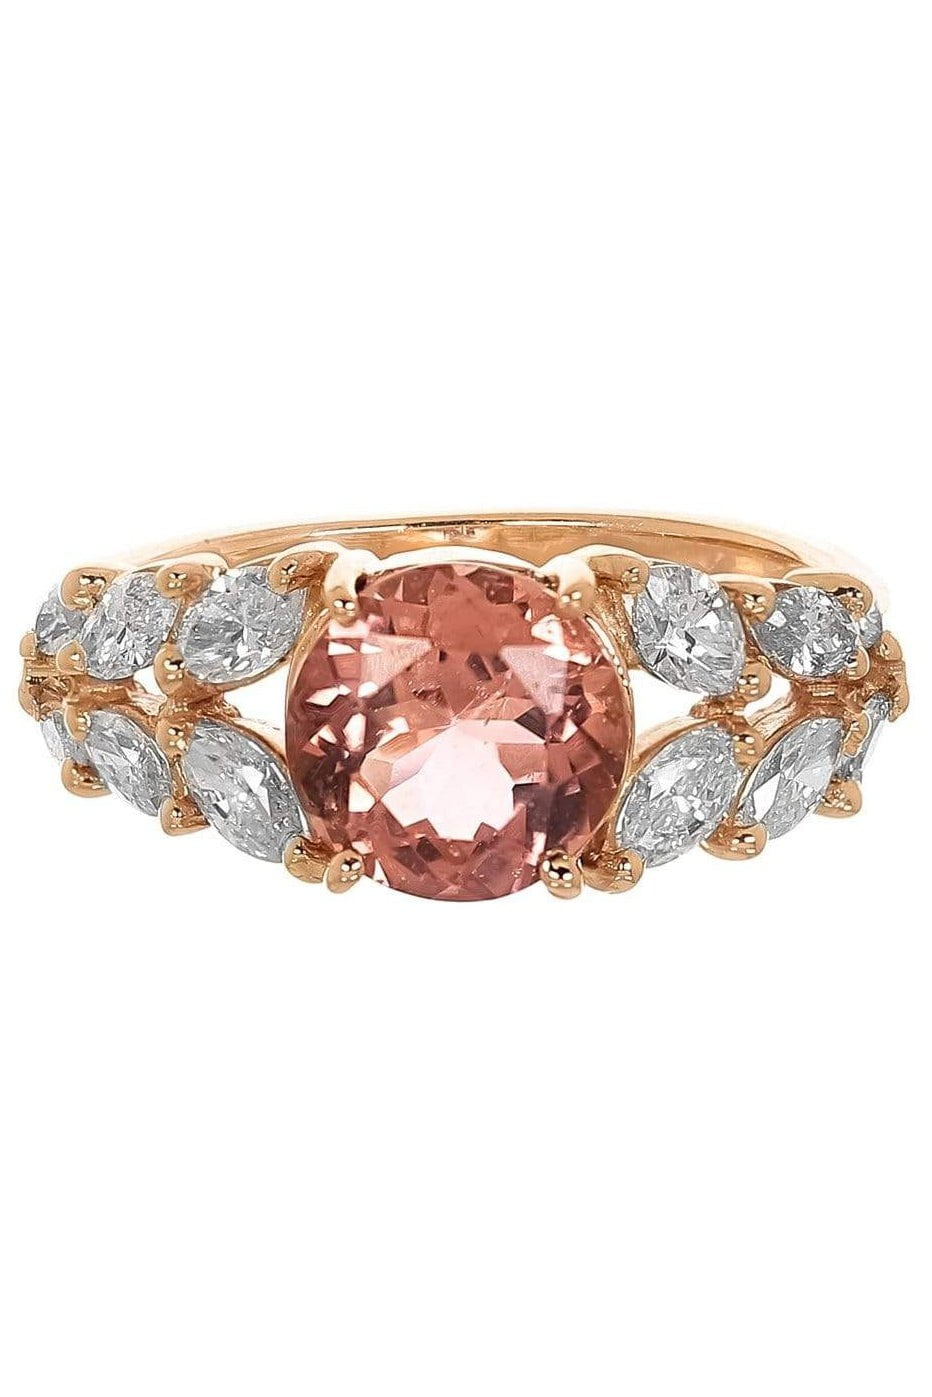 Flower Classic Gigi Pink diamond bracelet, Rose Gold, 6.7